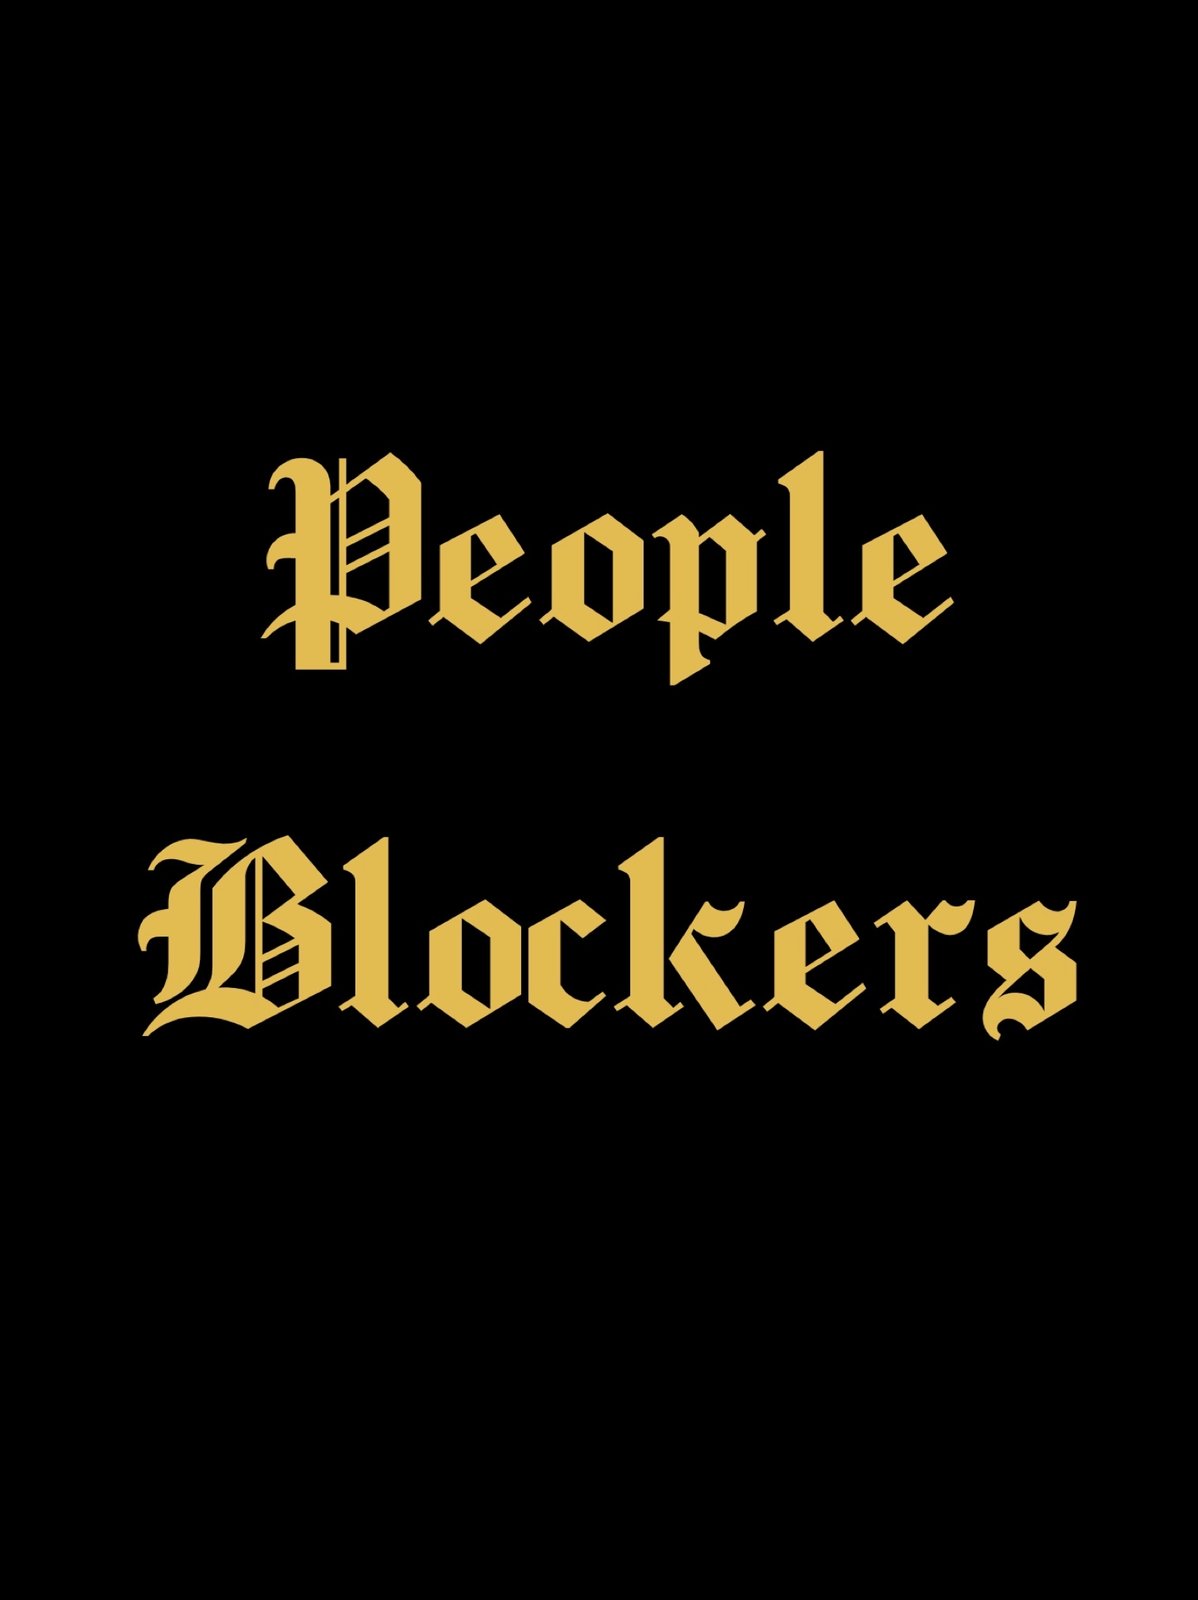 PEOPLE BLOCKERS's account image